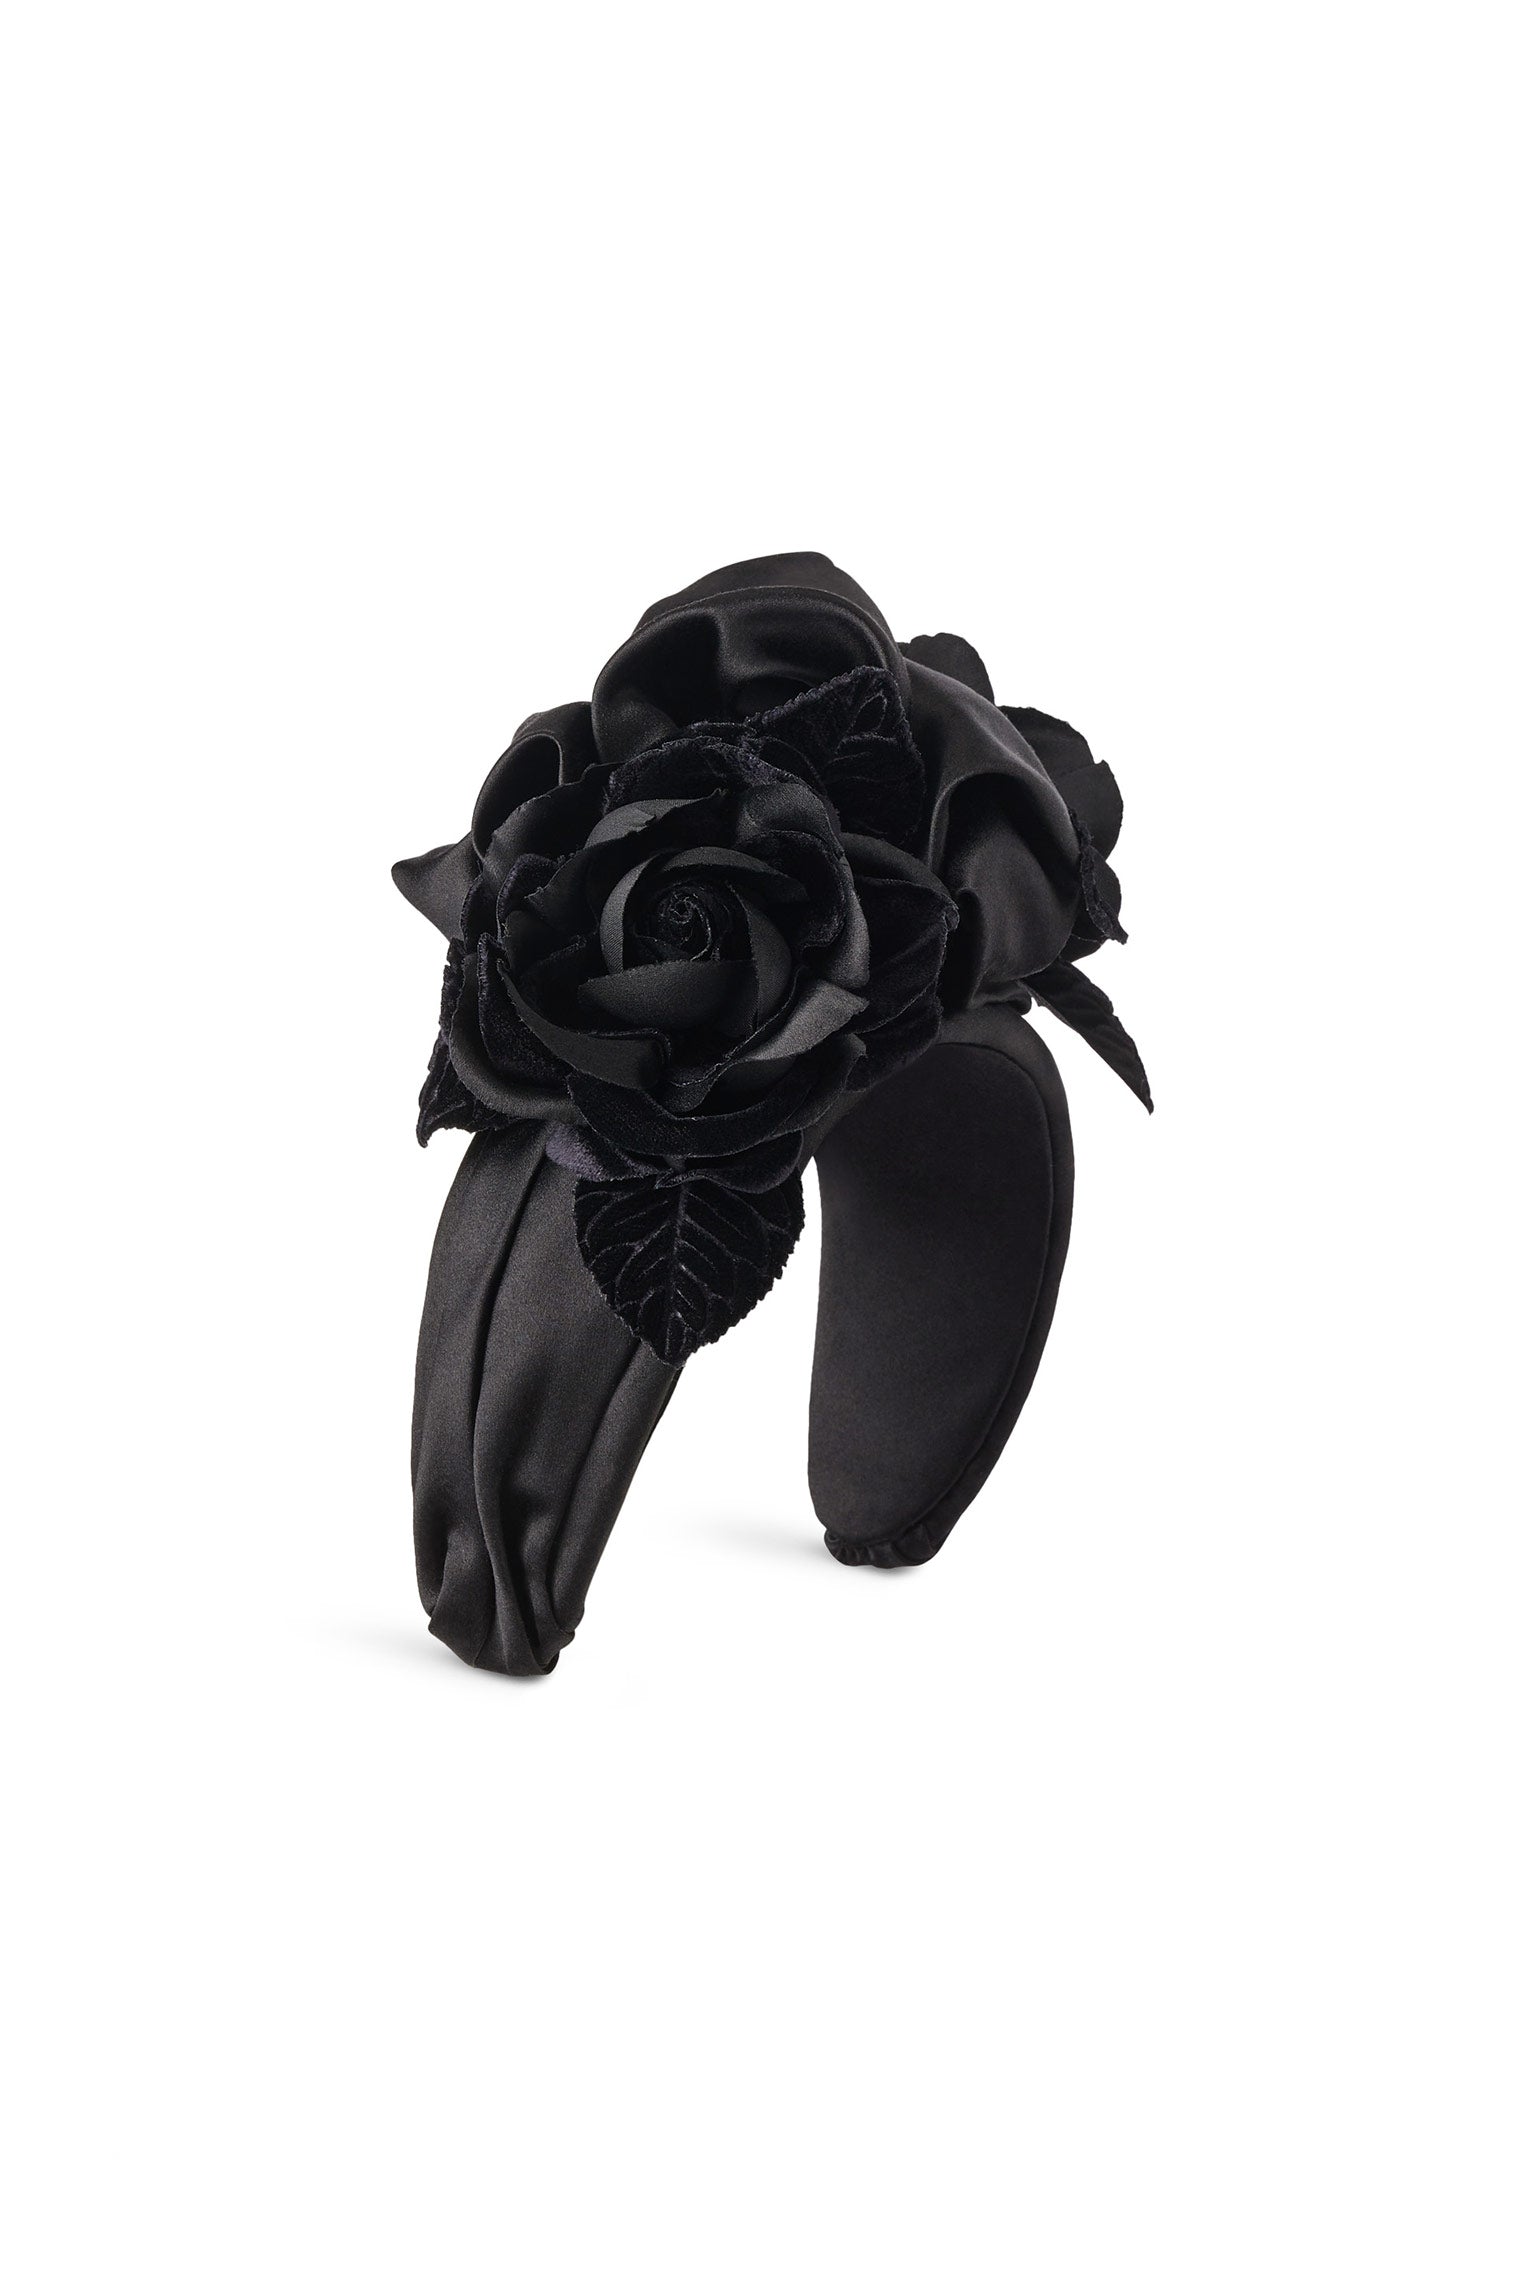 Dandridge Black Turban Headband - Lock Couture by Awon Golding - Lock & Co. Hatters London UK